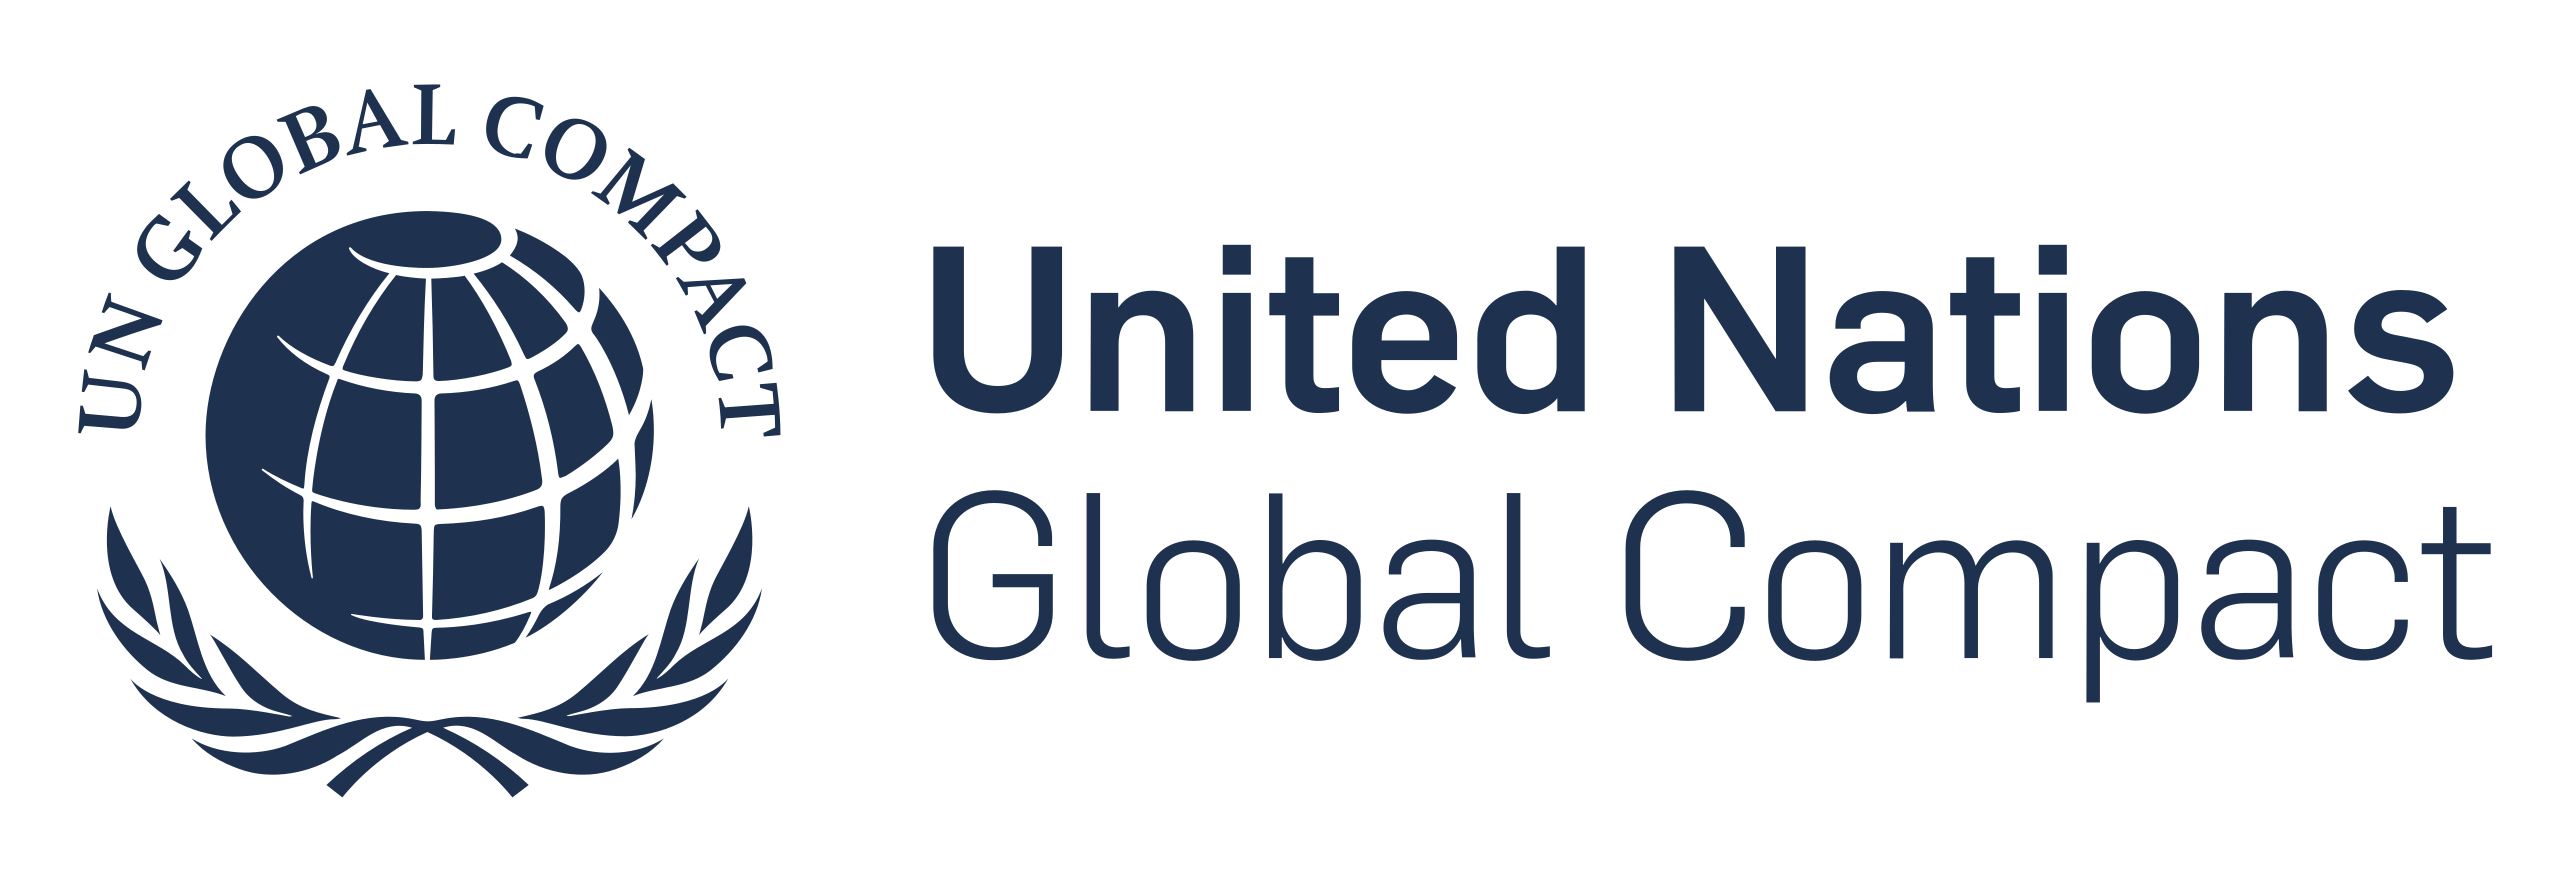 united nations global compact logo